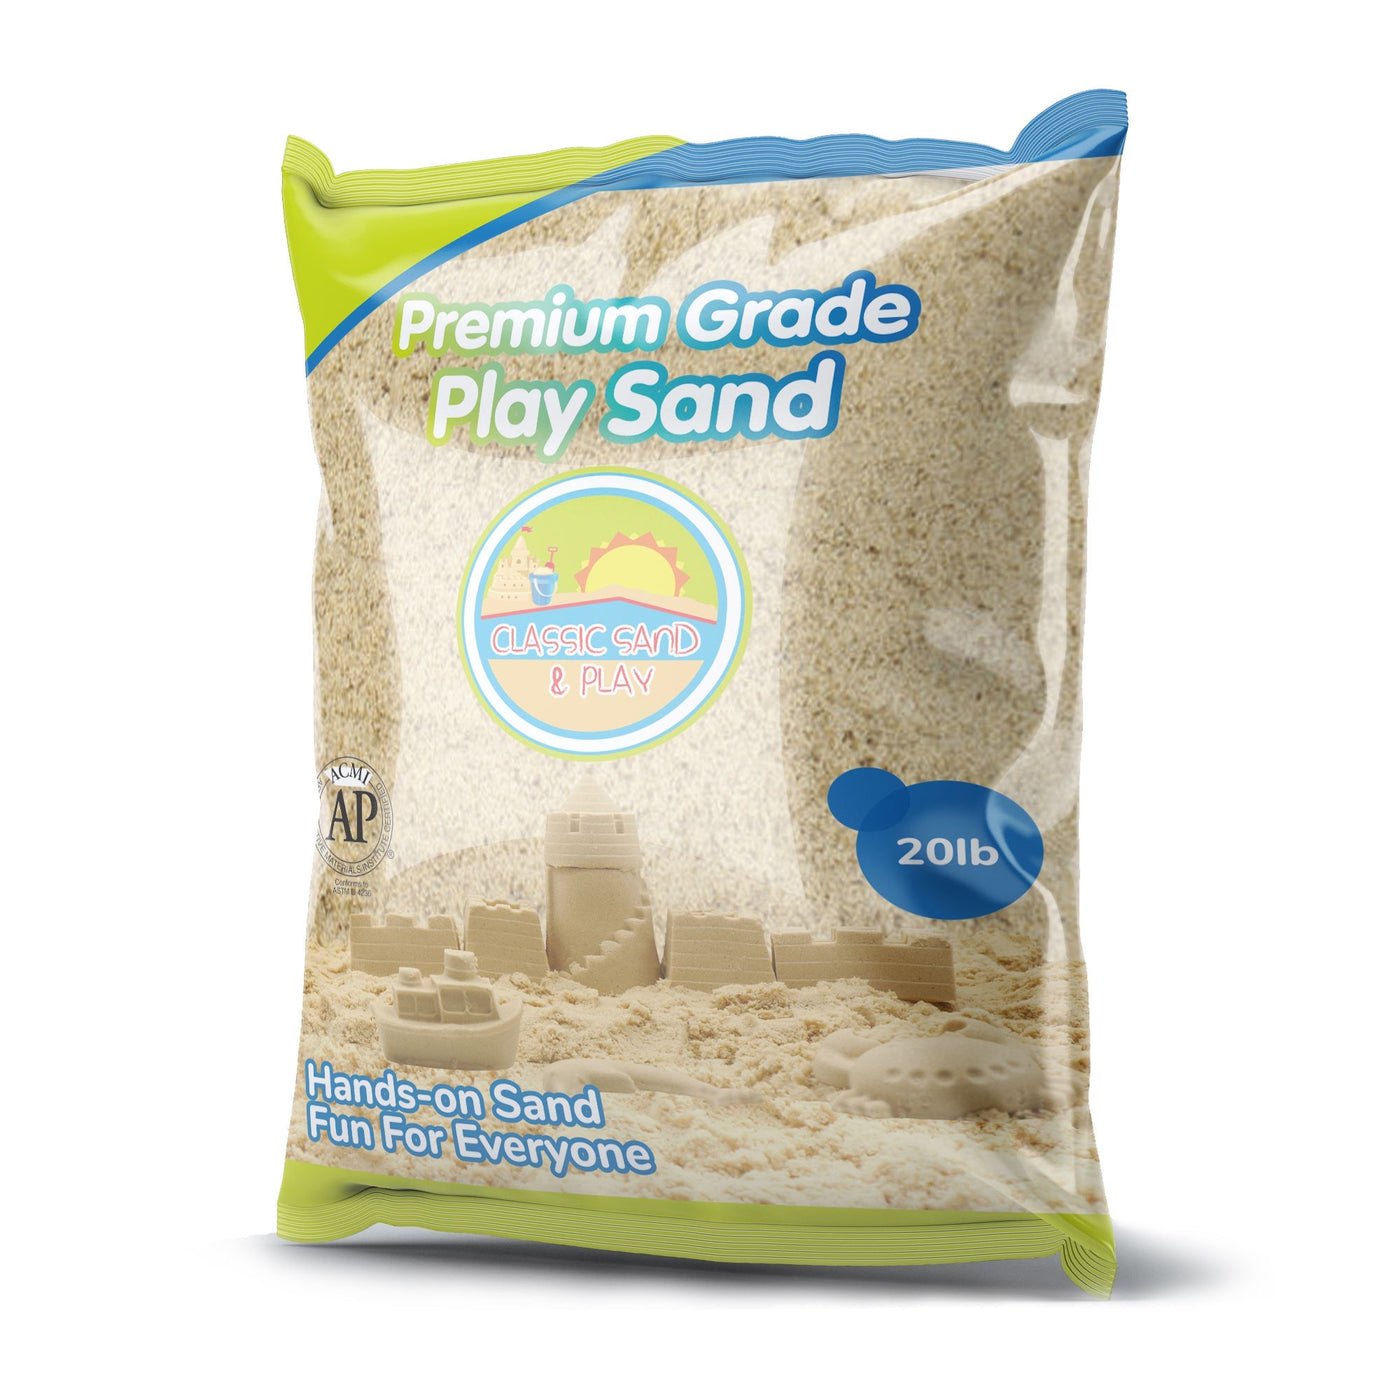 Play Sand vs Builders Sand